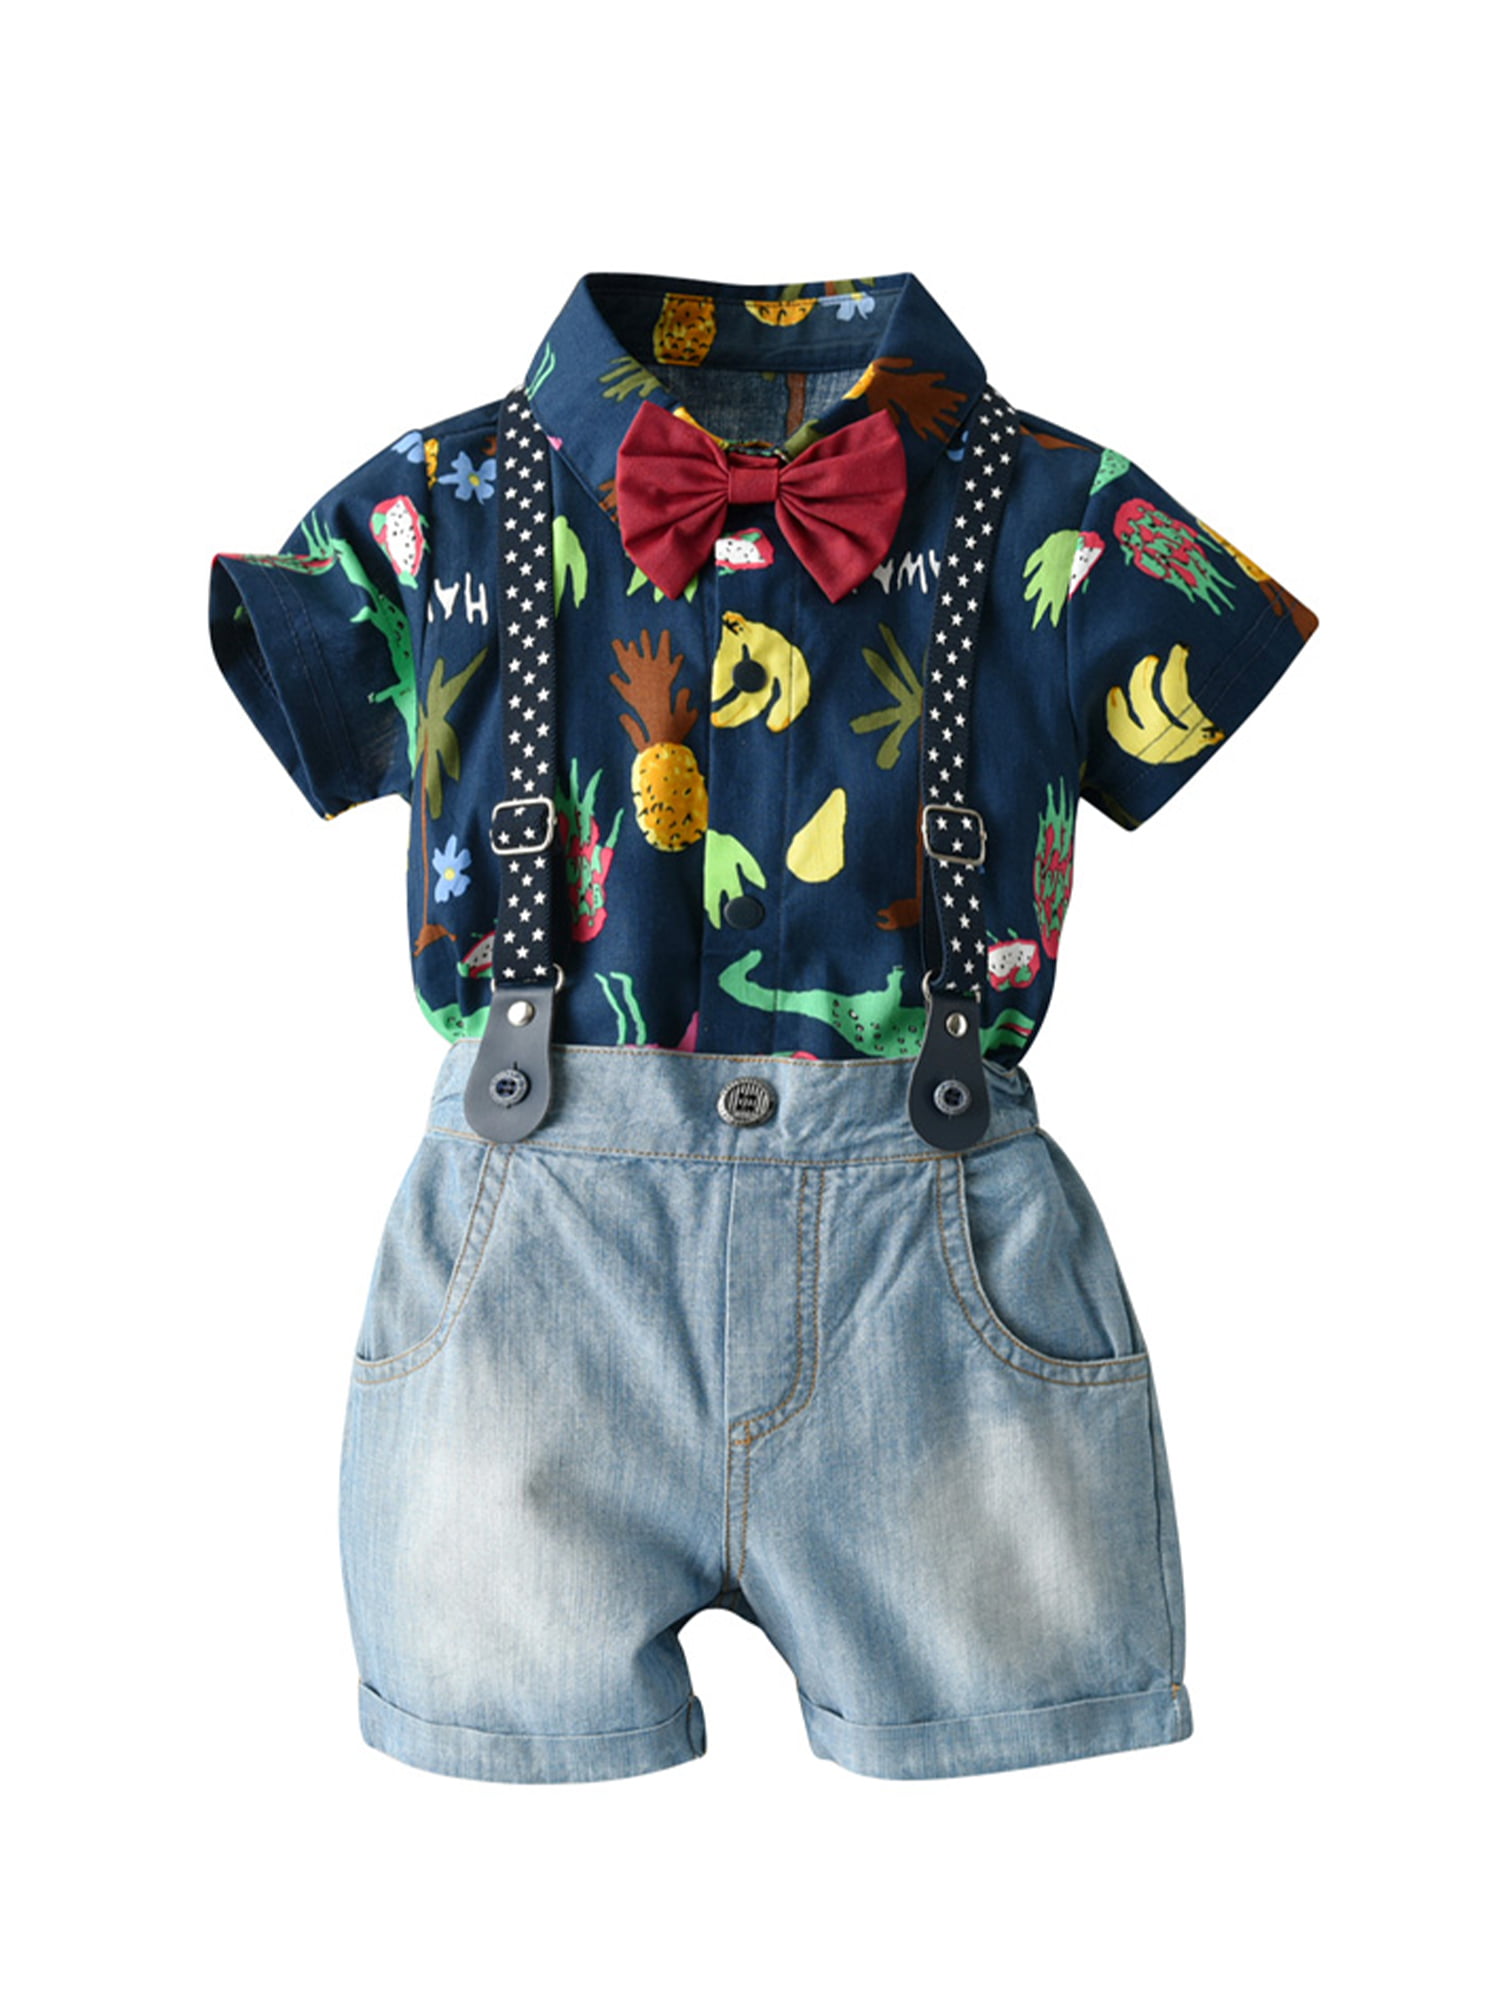 Details about   Toddler Baby Boys Dinosaur Gentleman Bowtie Shirt Romper+Suspenders Pants Set